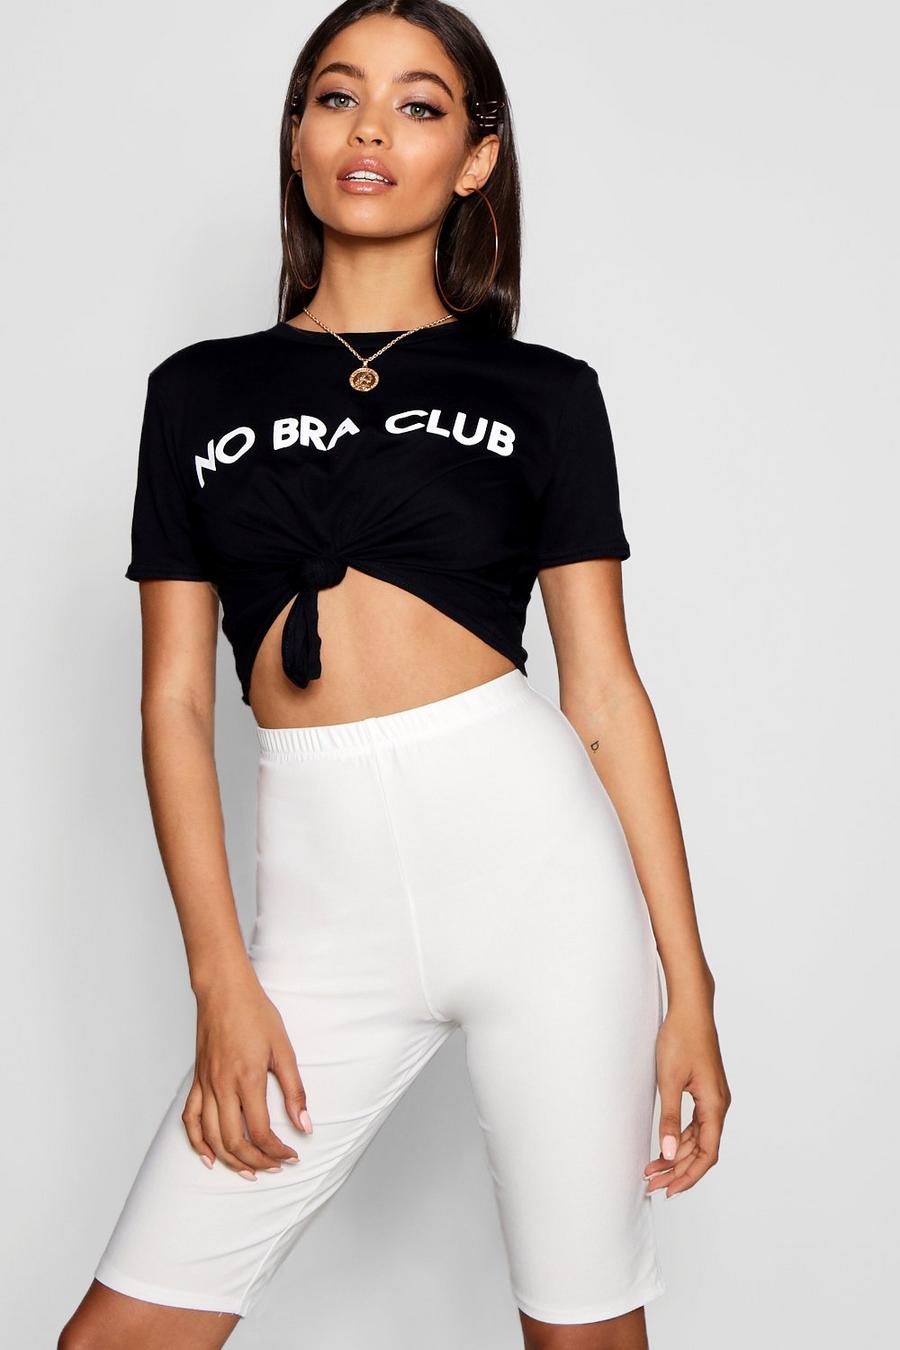 Women's Short Sleeves Crop Tops T-Shirt No Bra Club Short Tee, 3